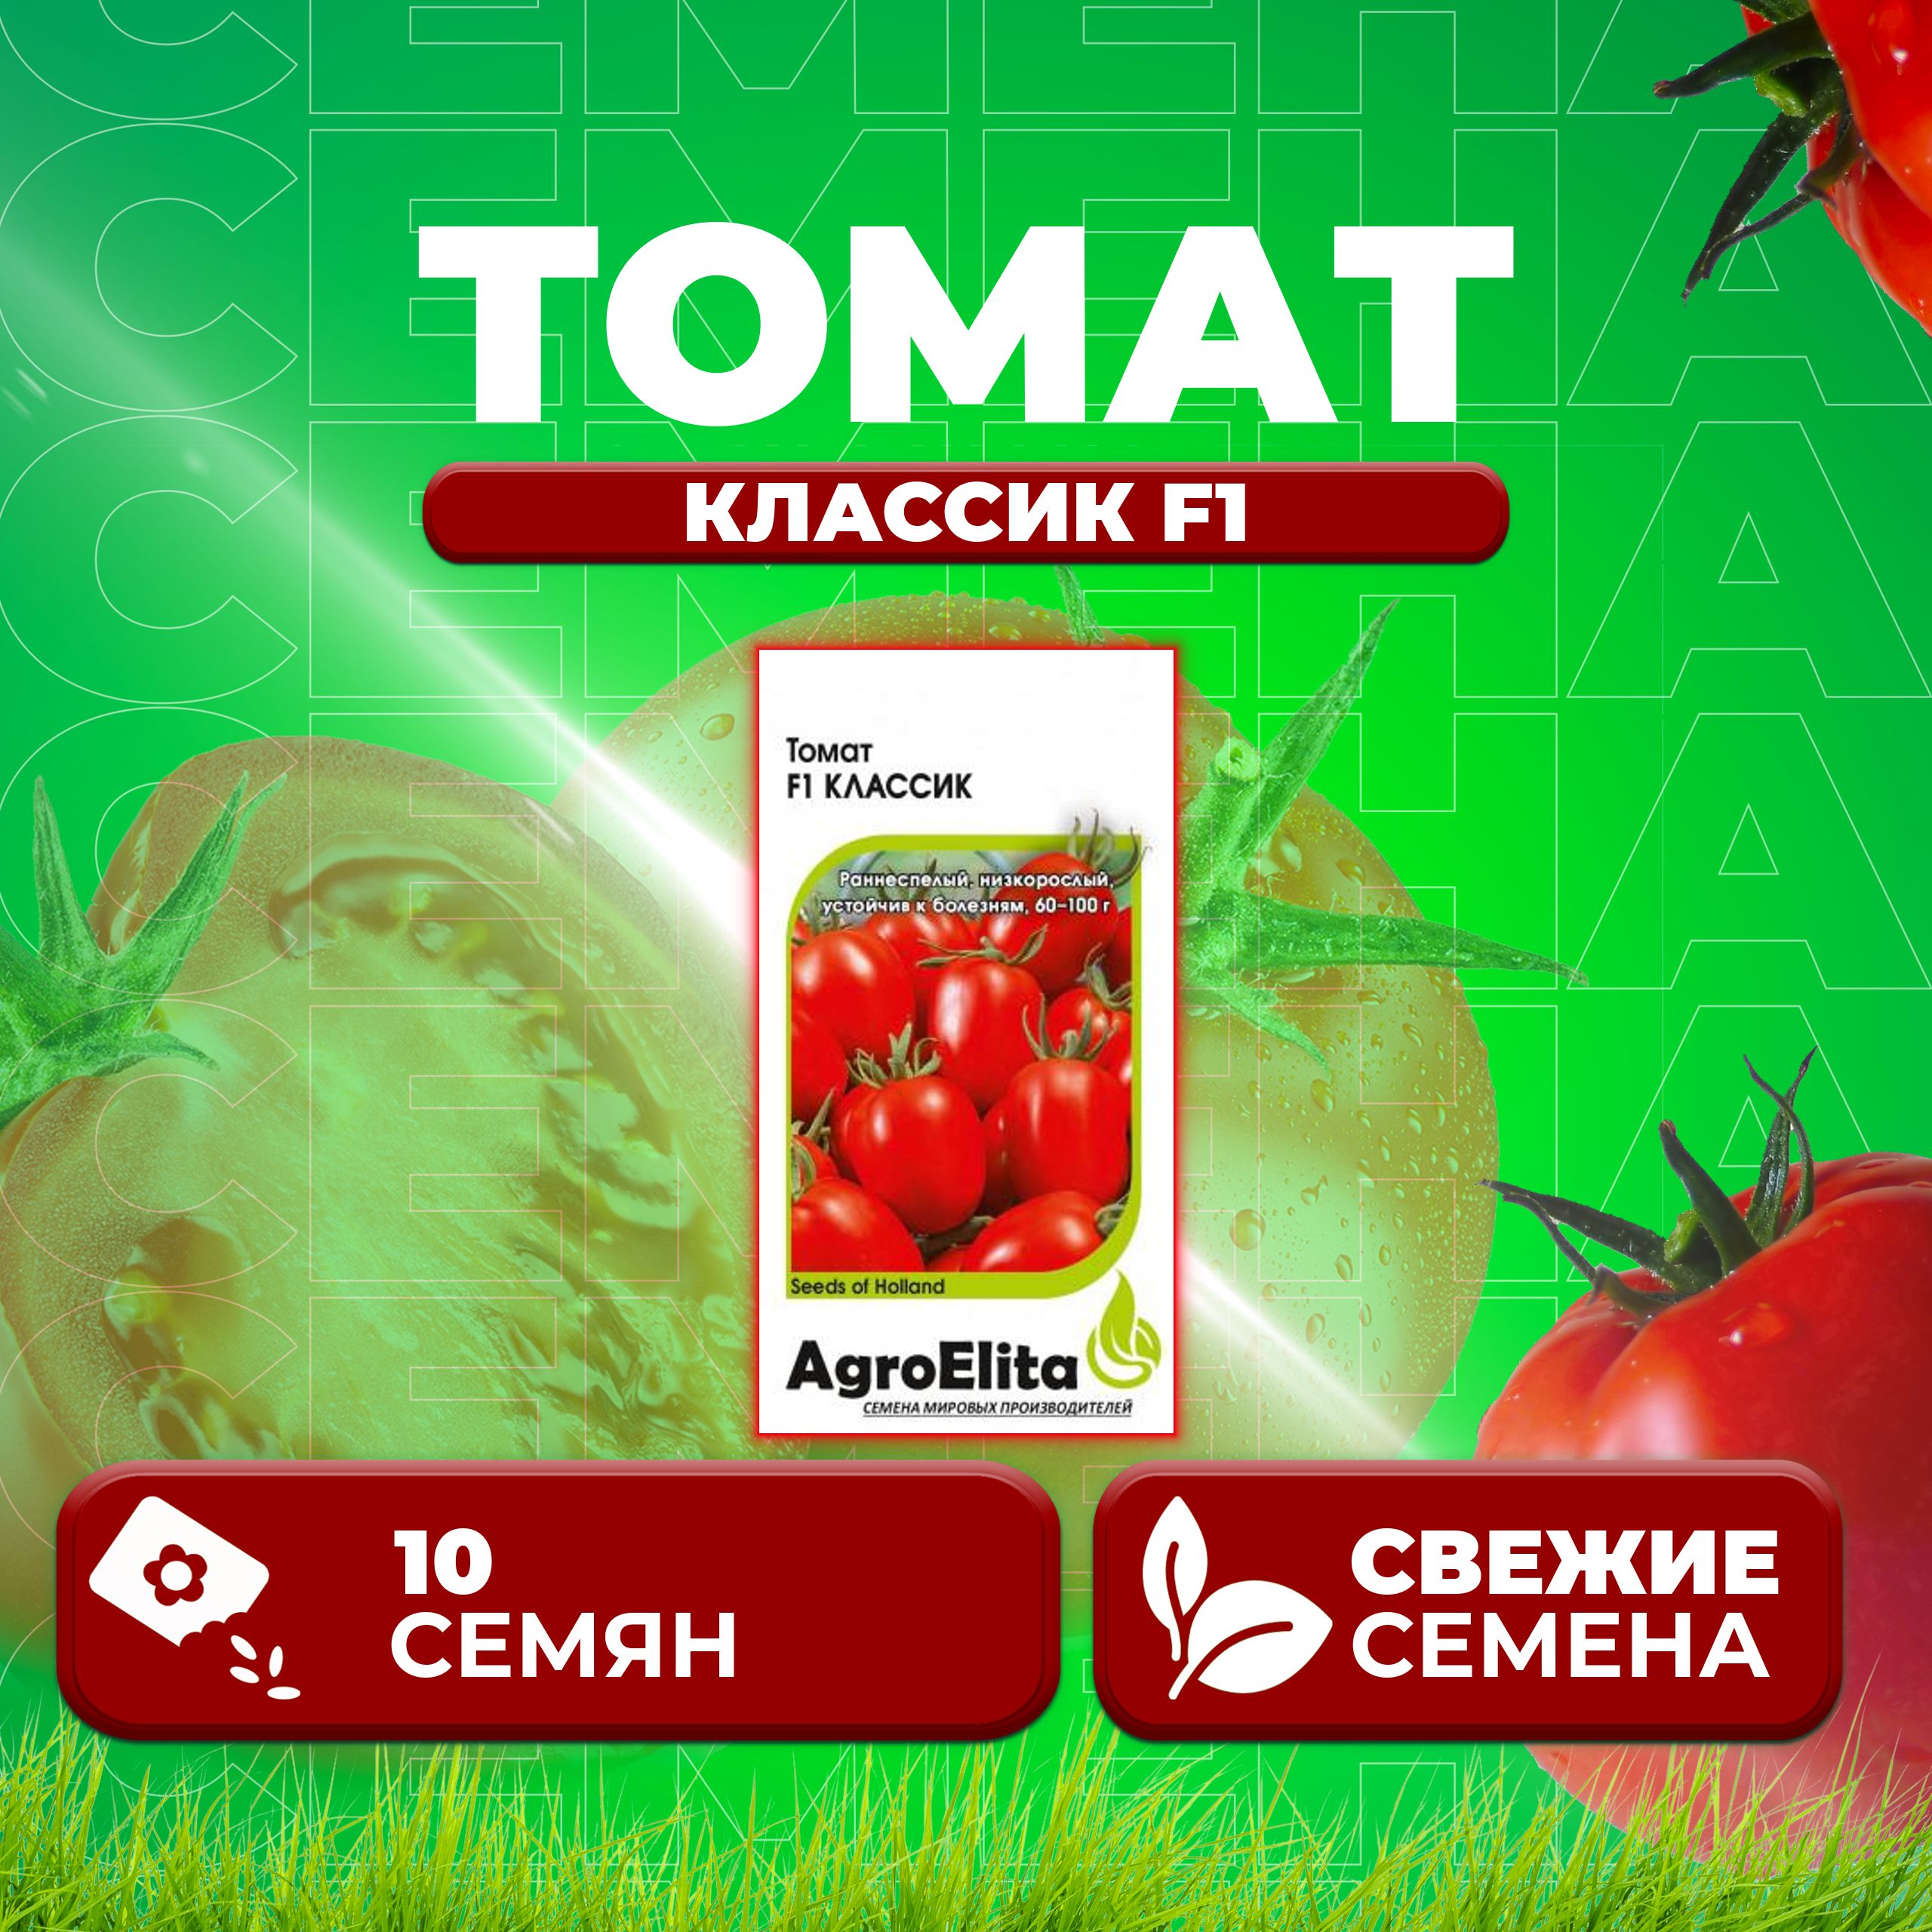 Семена томат Классик F1 AgroElita 1999946877-1 1 уп.